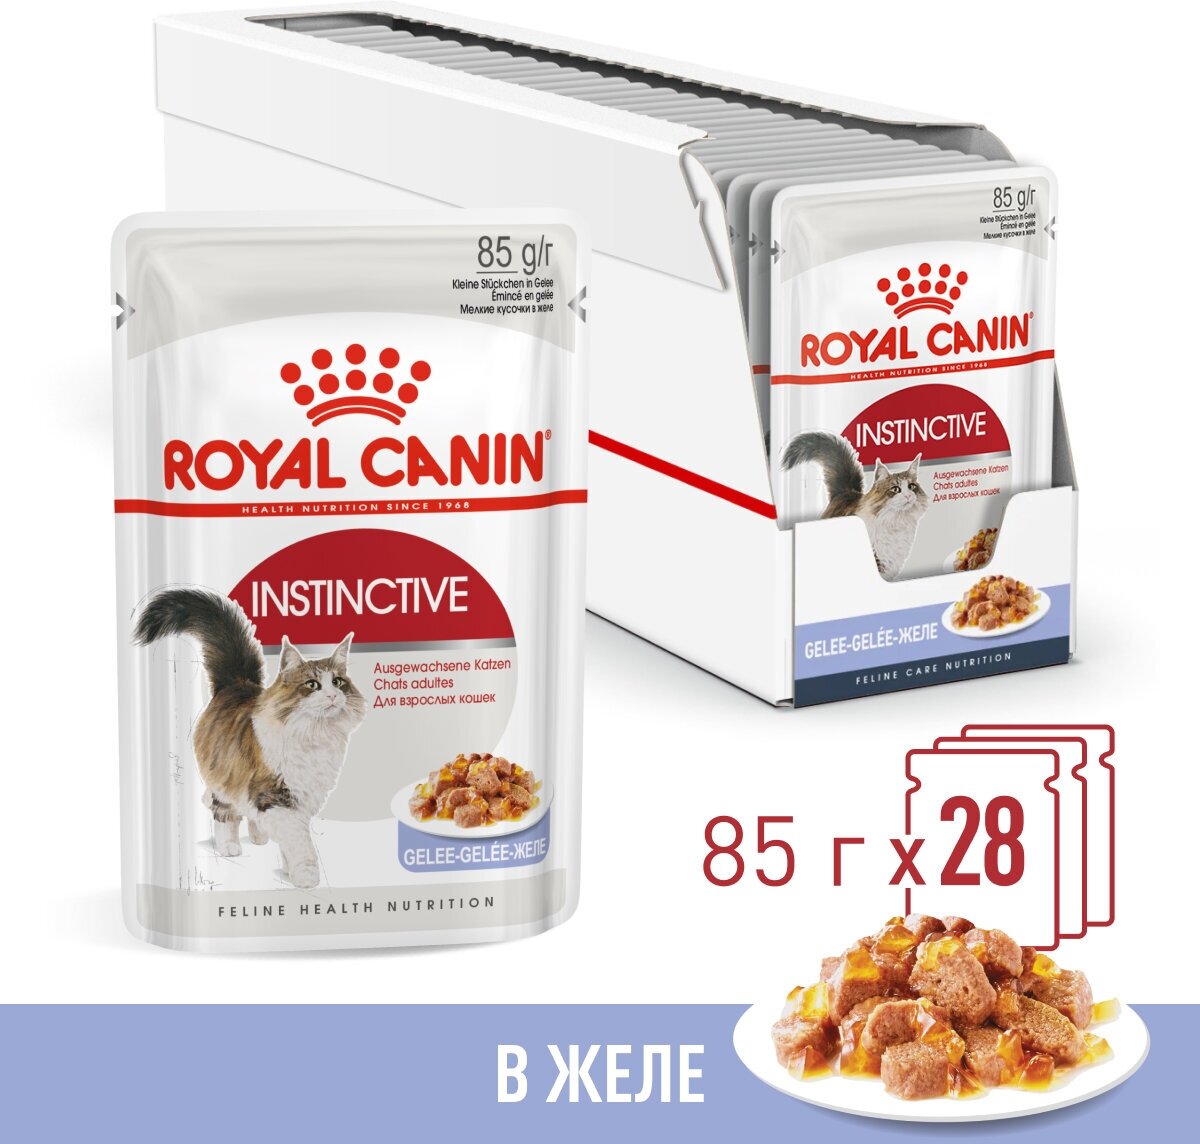     Royal Canin Instinctive ()   ,, 28x85